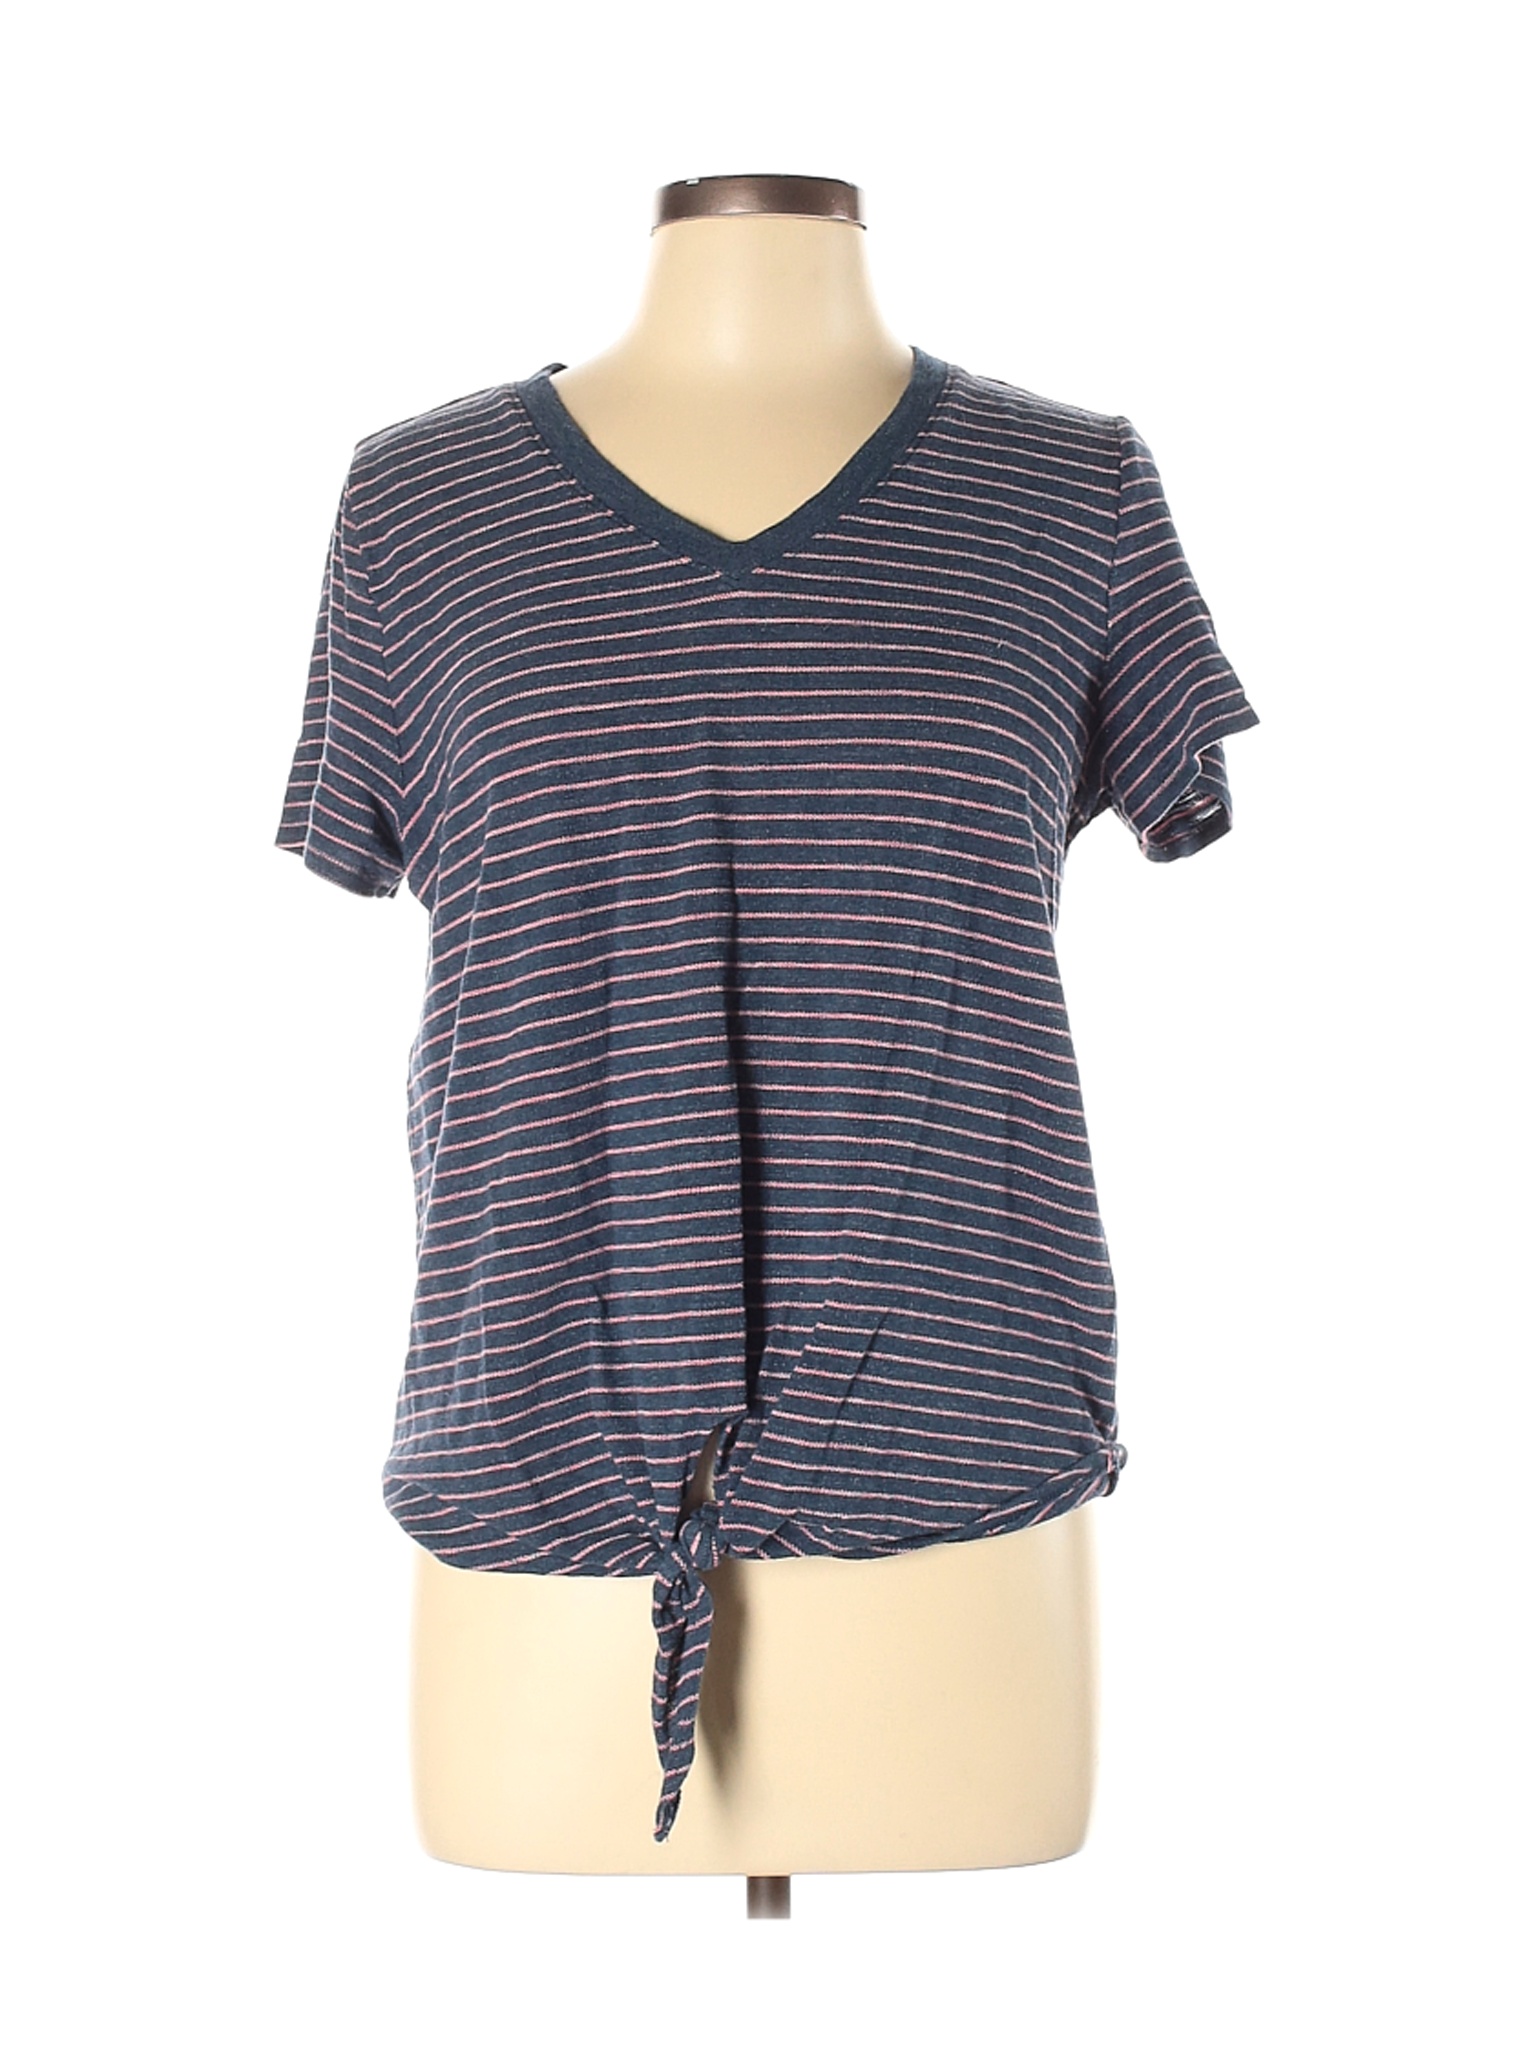 Universal Thread Women Blue Short Sleeve T-Shirt L | eBay